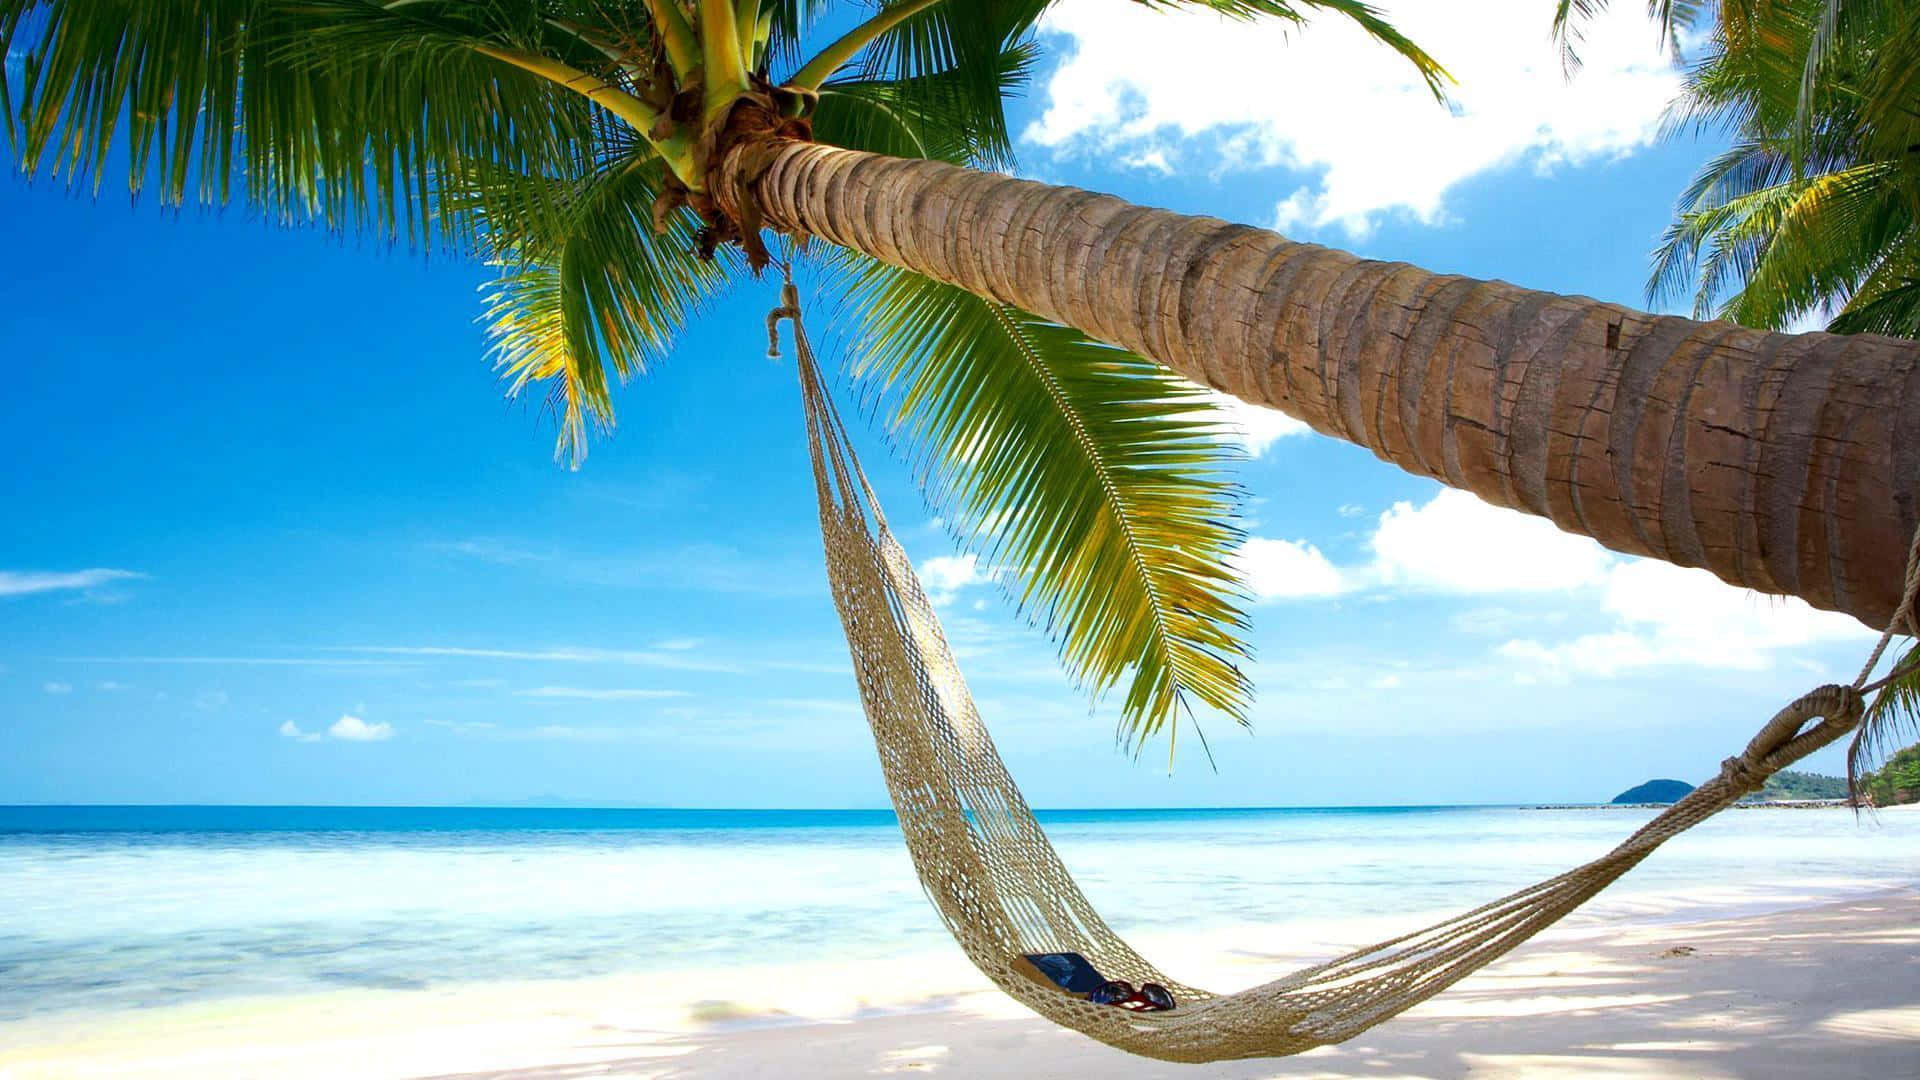 Tropical Coconut Trees under Blue Sky